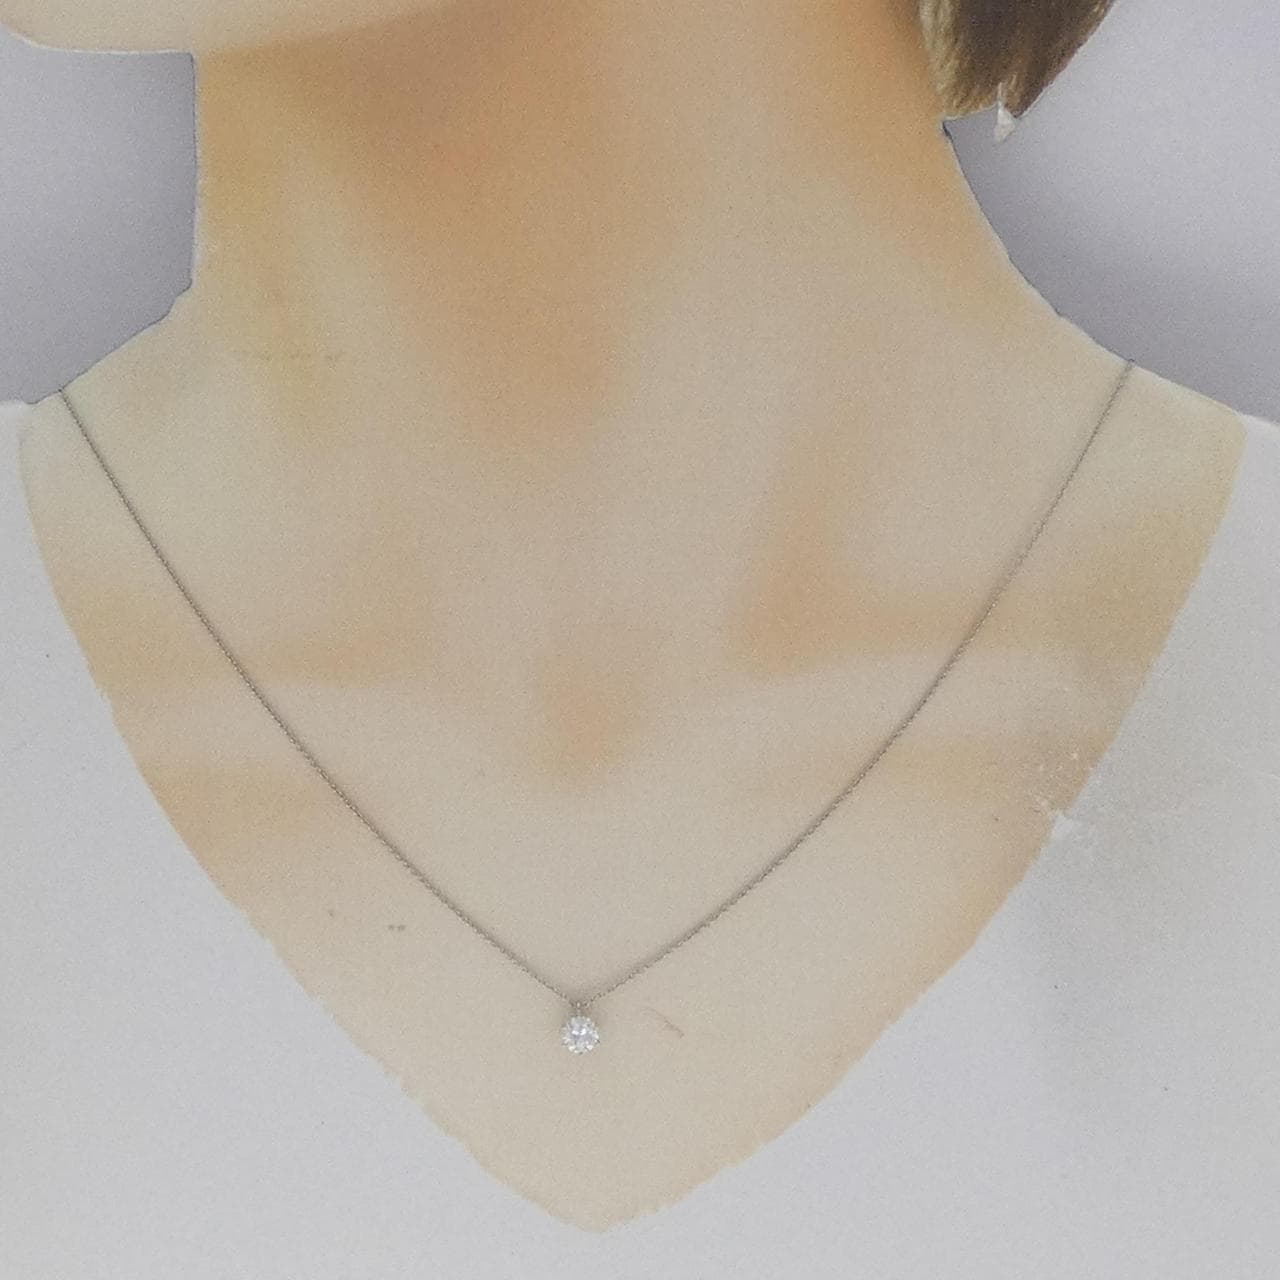 [Remake] PT Diamond Necklace 0.418CT E SI1 Good